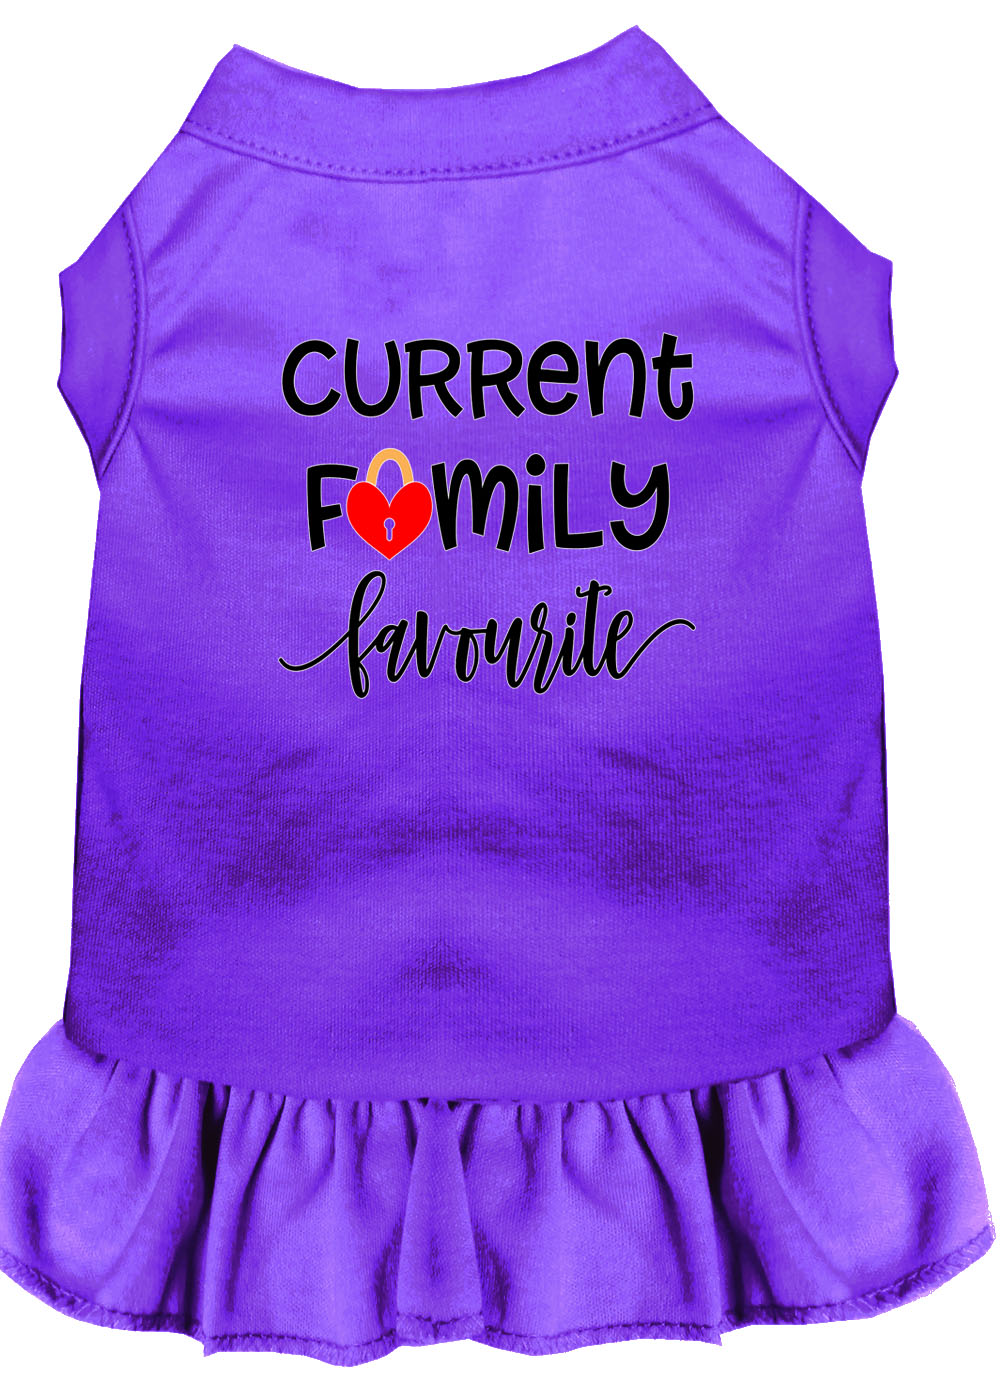 Family Favorite Screen Print Dog Dress Purple Sm